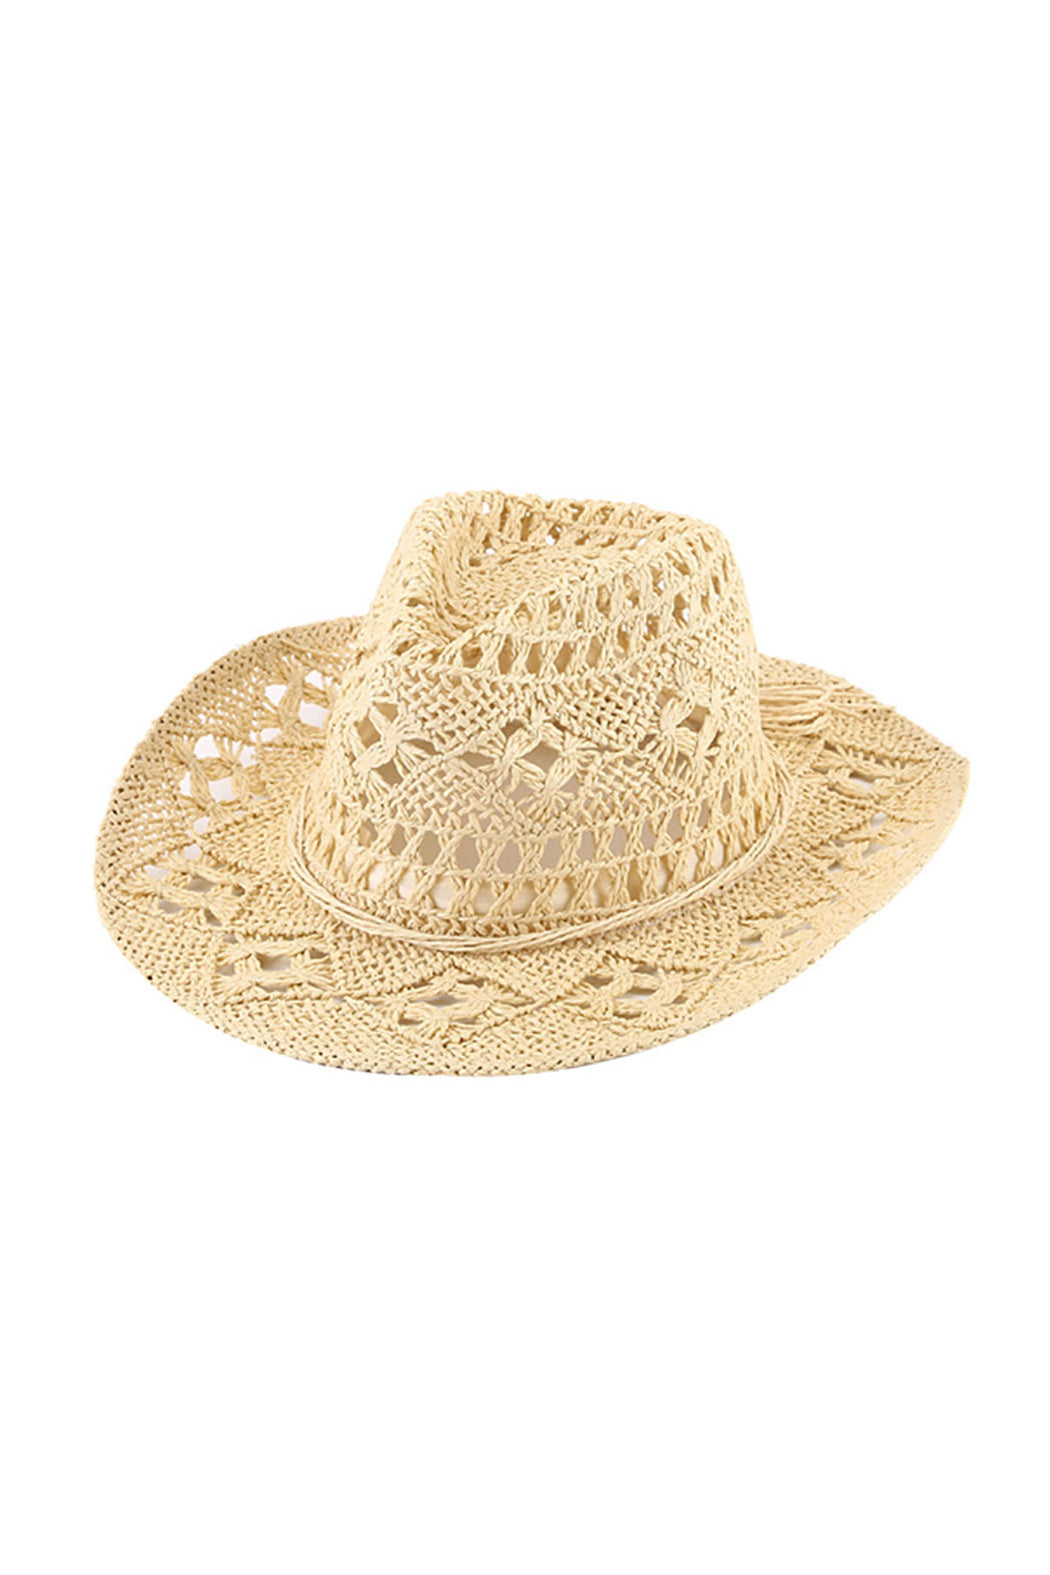 Crochet Style Straw Cowboy Hat